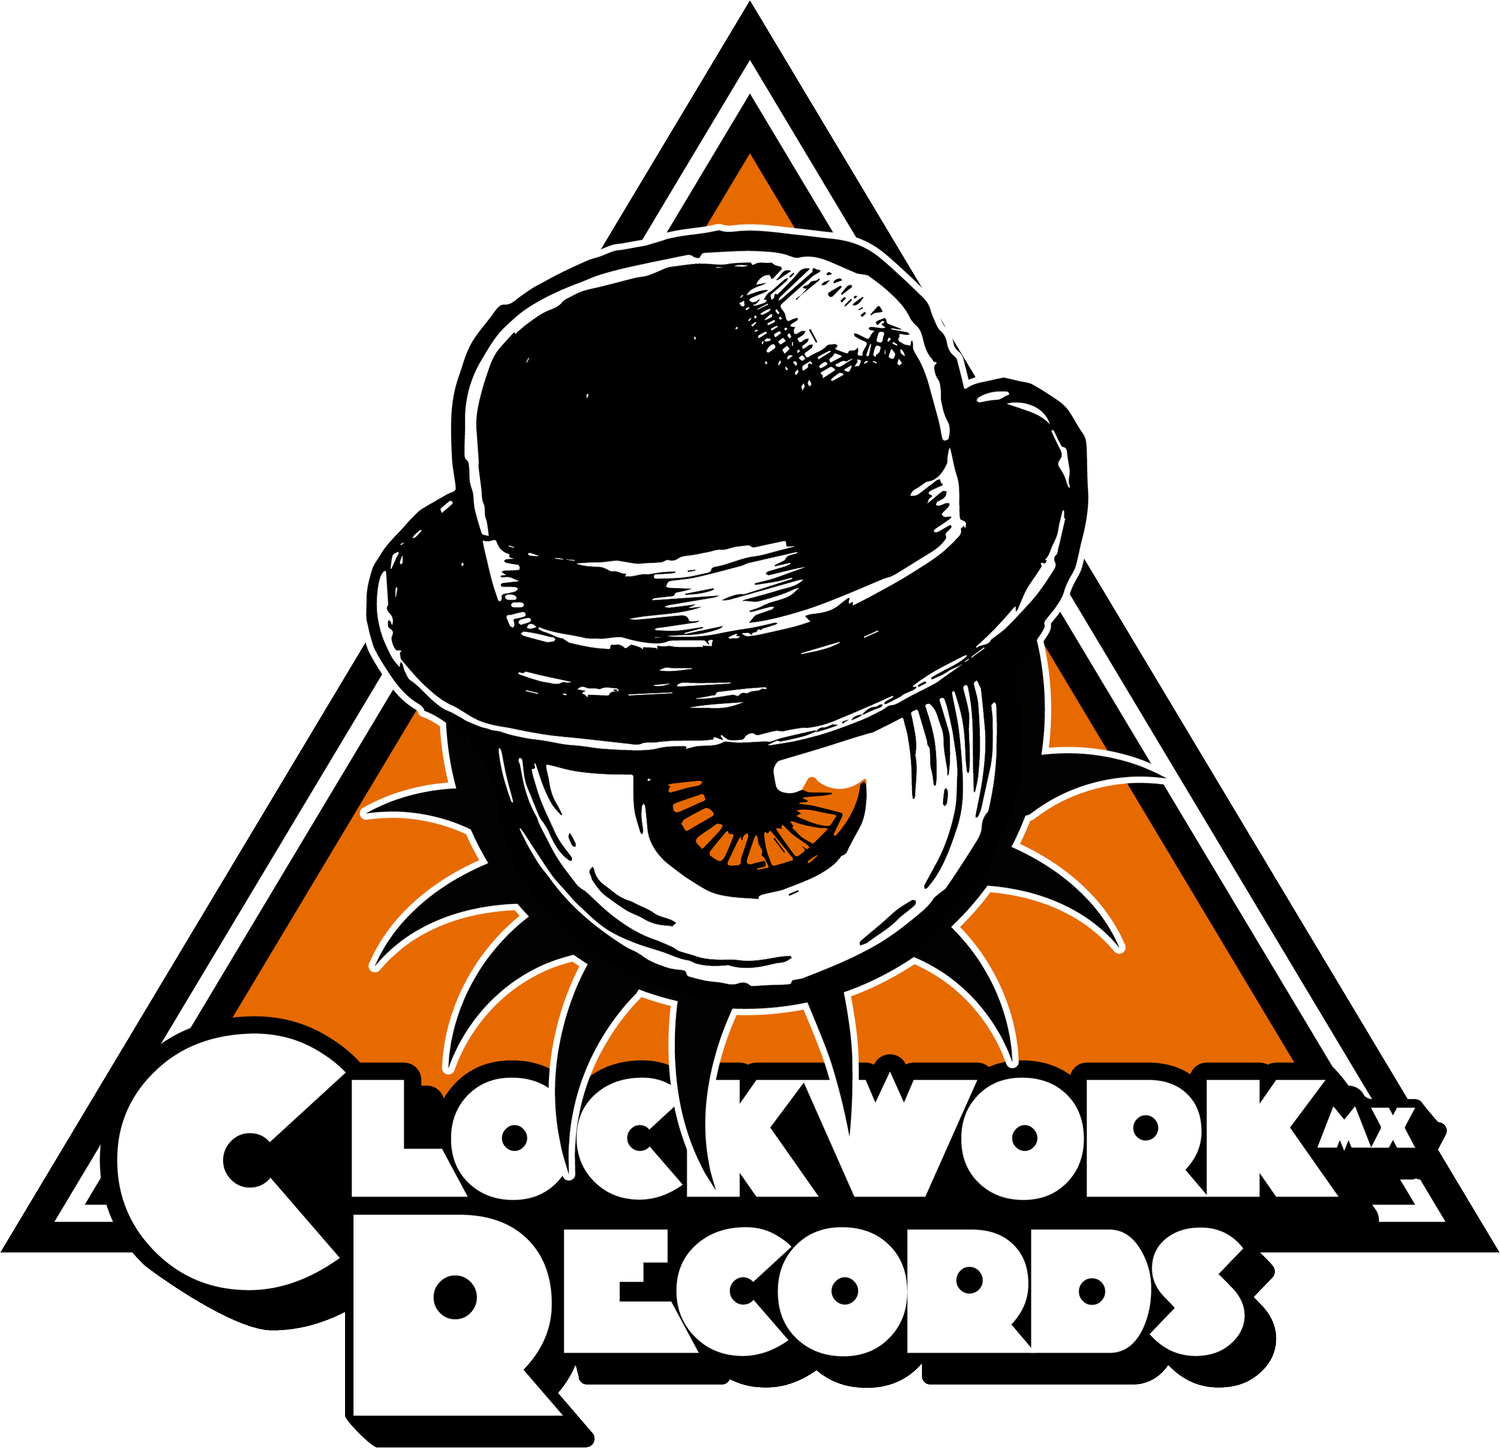 Clockwork Mx Records 